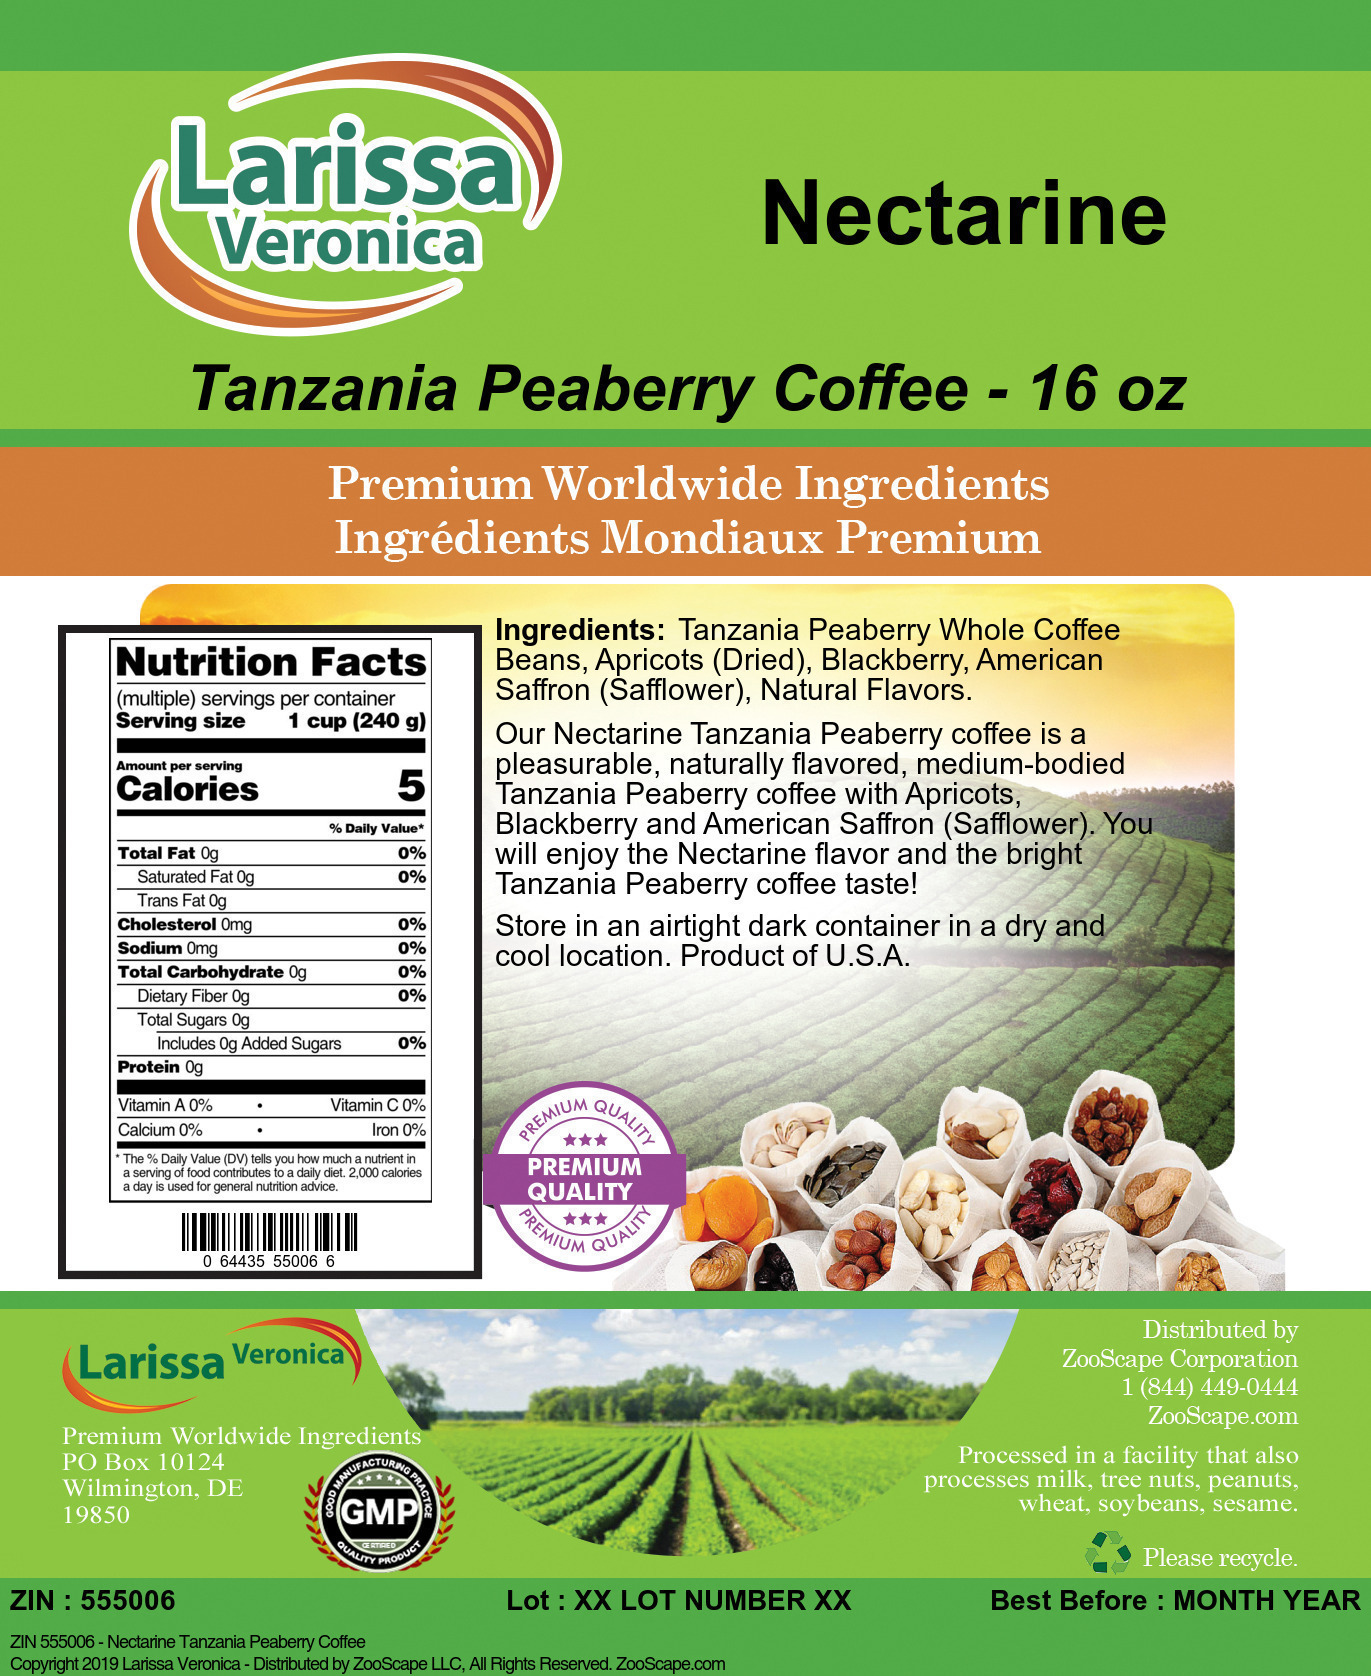 Nectarine Tanzania Peaberry Coffee - Label